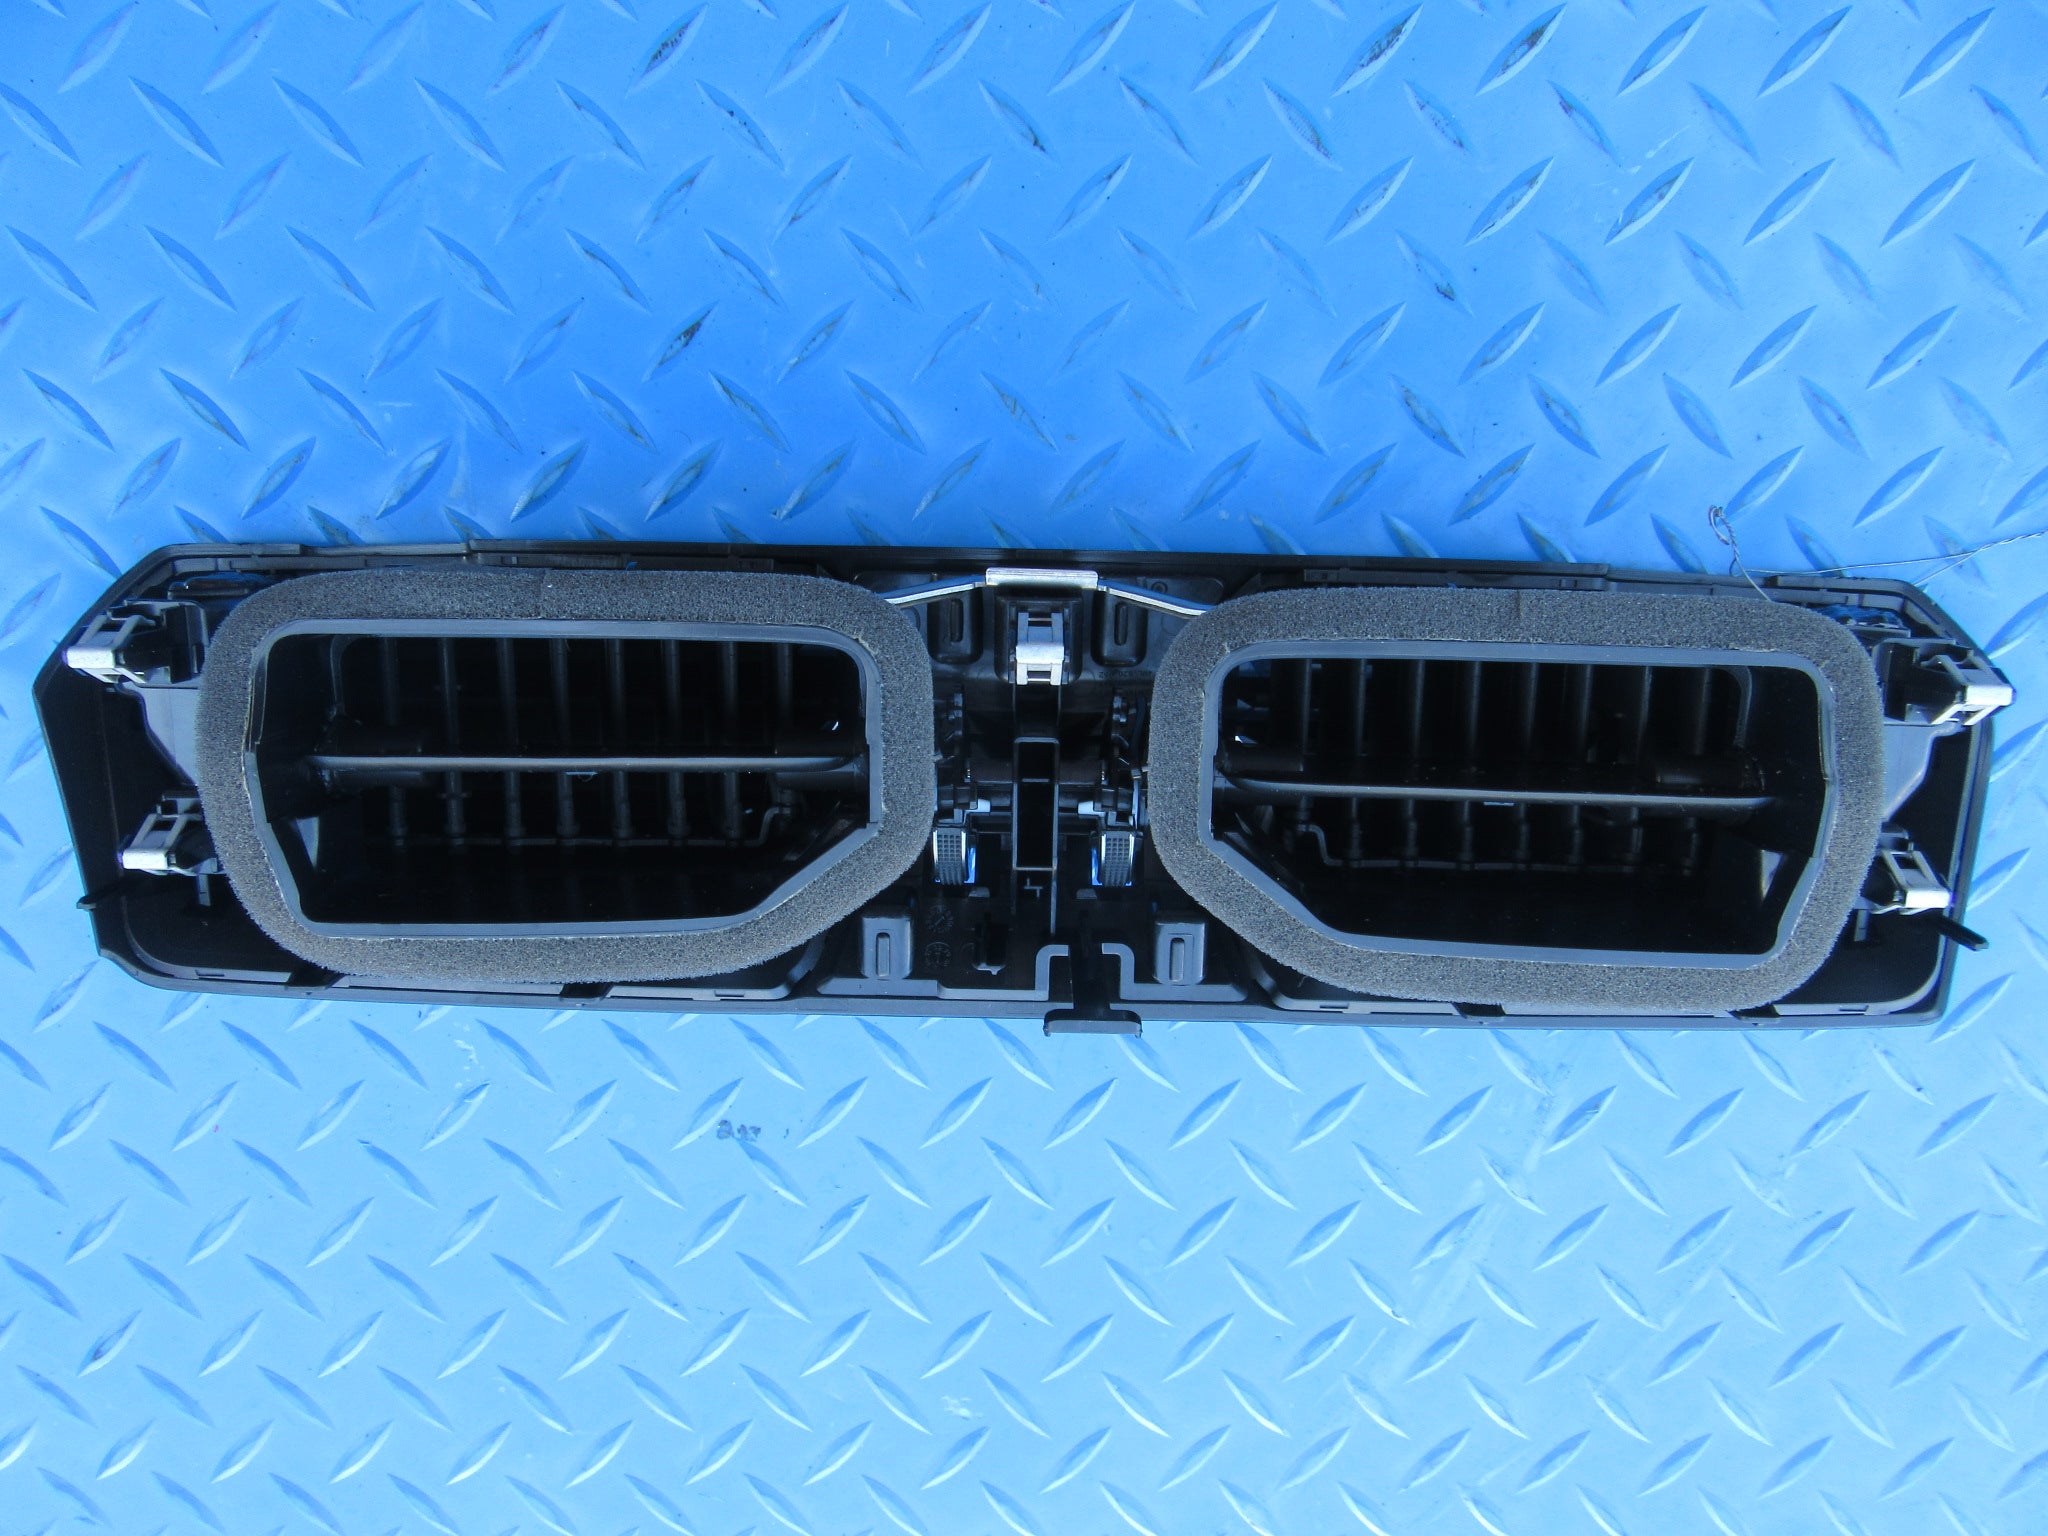 Lamborghini Urus center dashboard dash air vents #2502